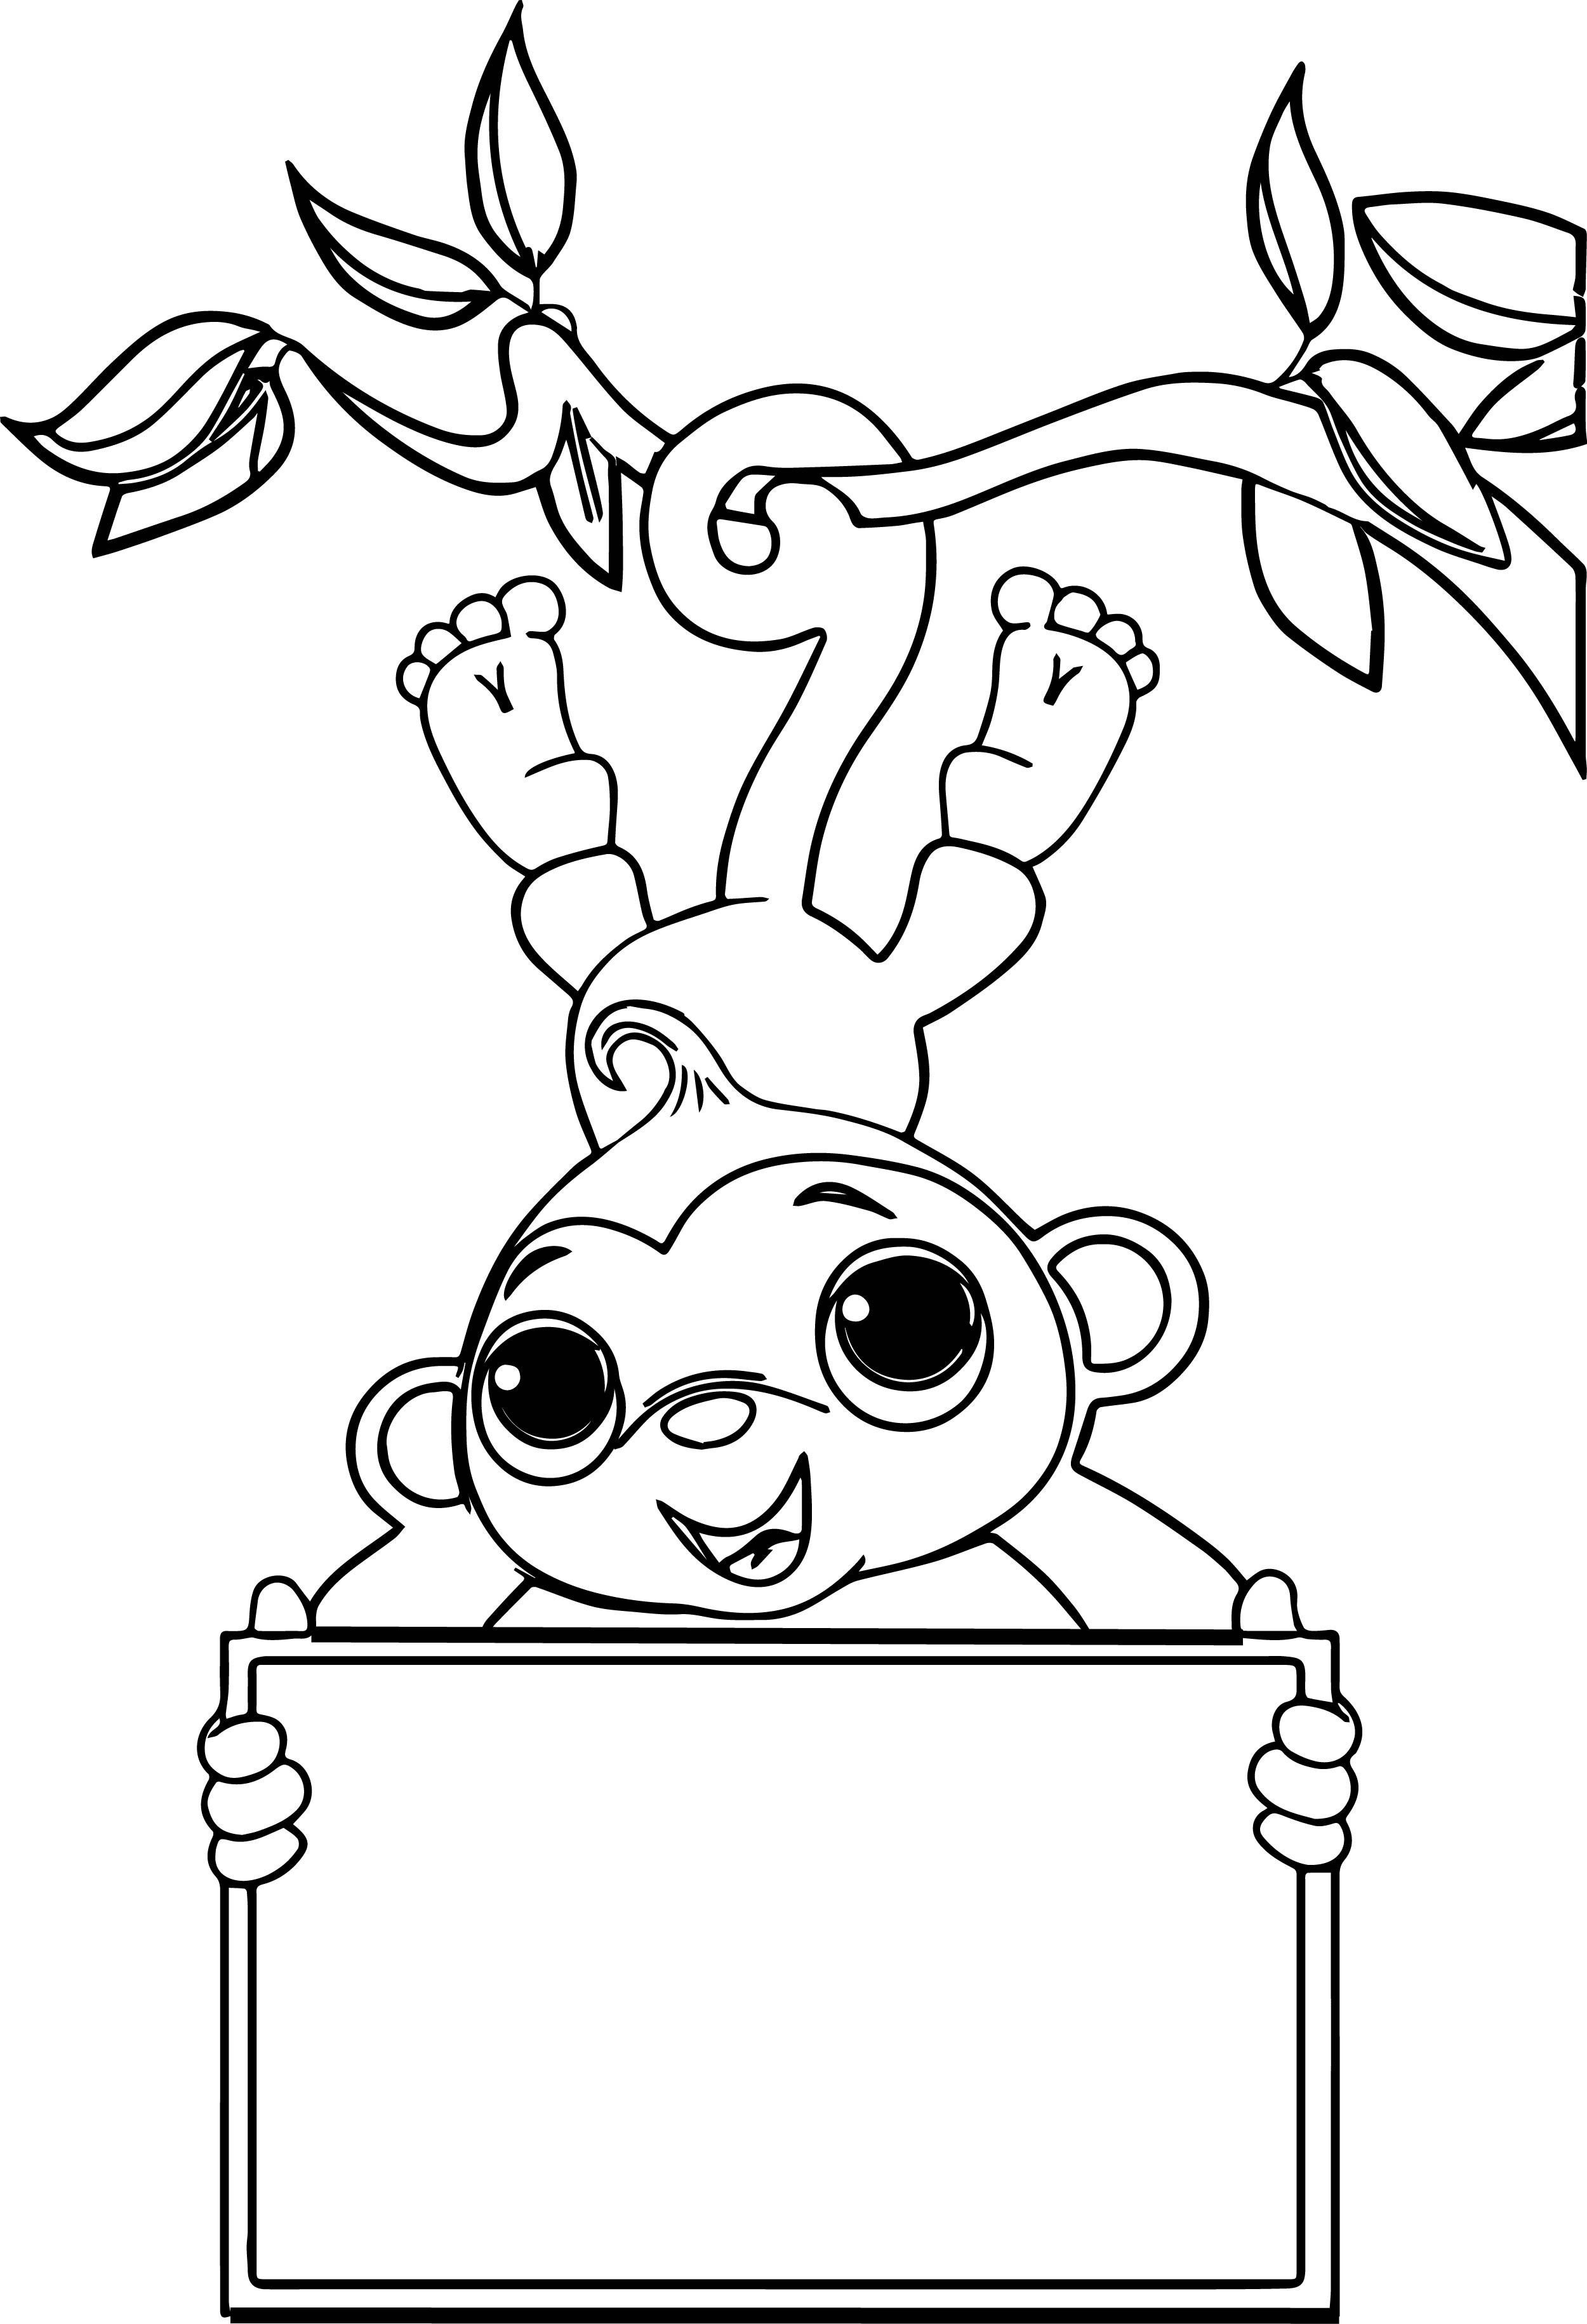 Free Preschool Coloring Sheets Of Monkeys
 Sock Monkey Coloring Pages Gallery Free Coloring Books